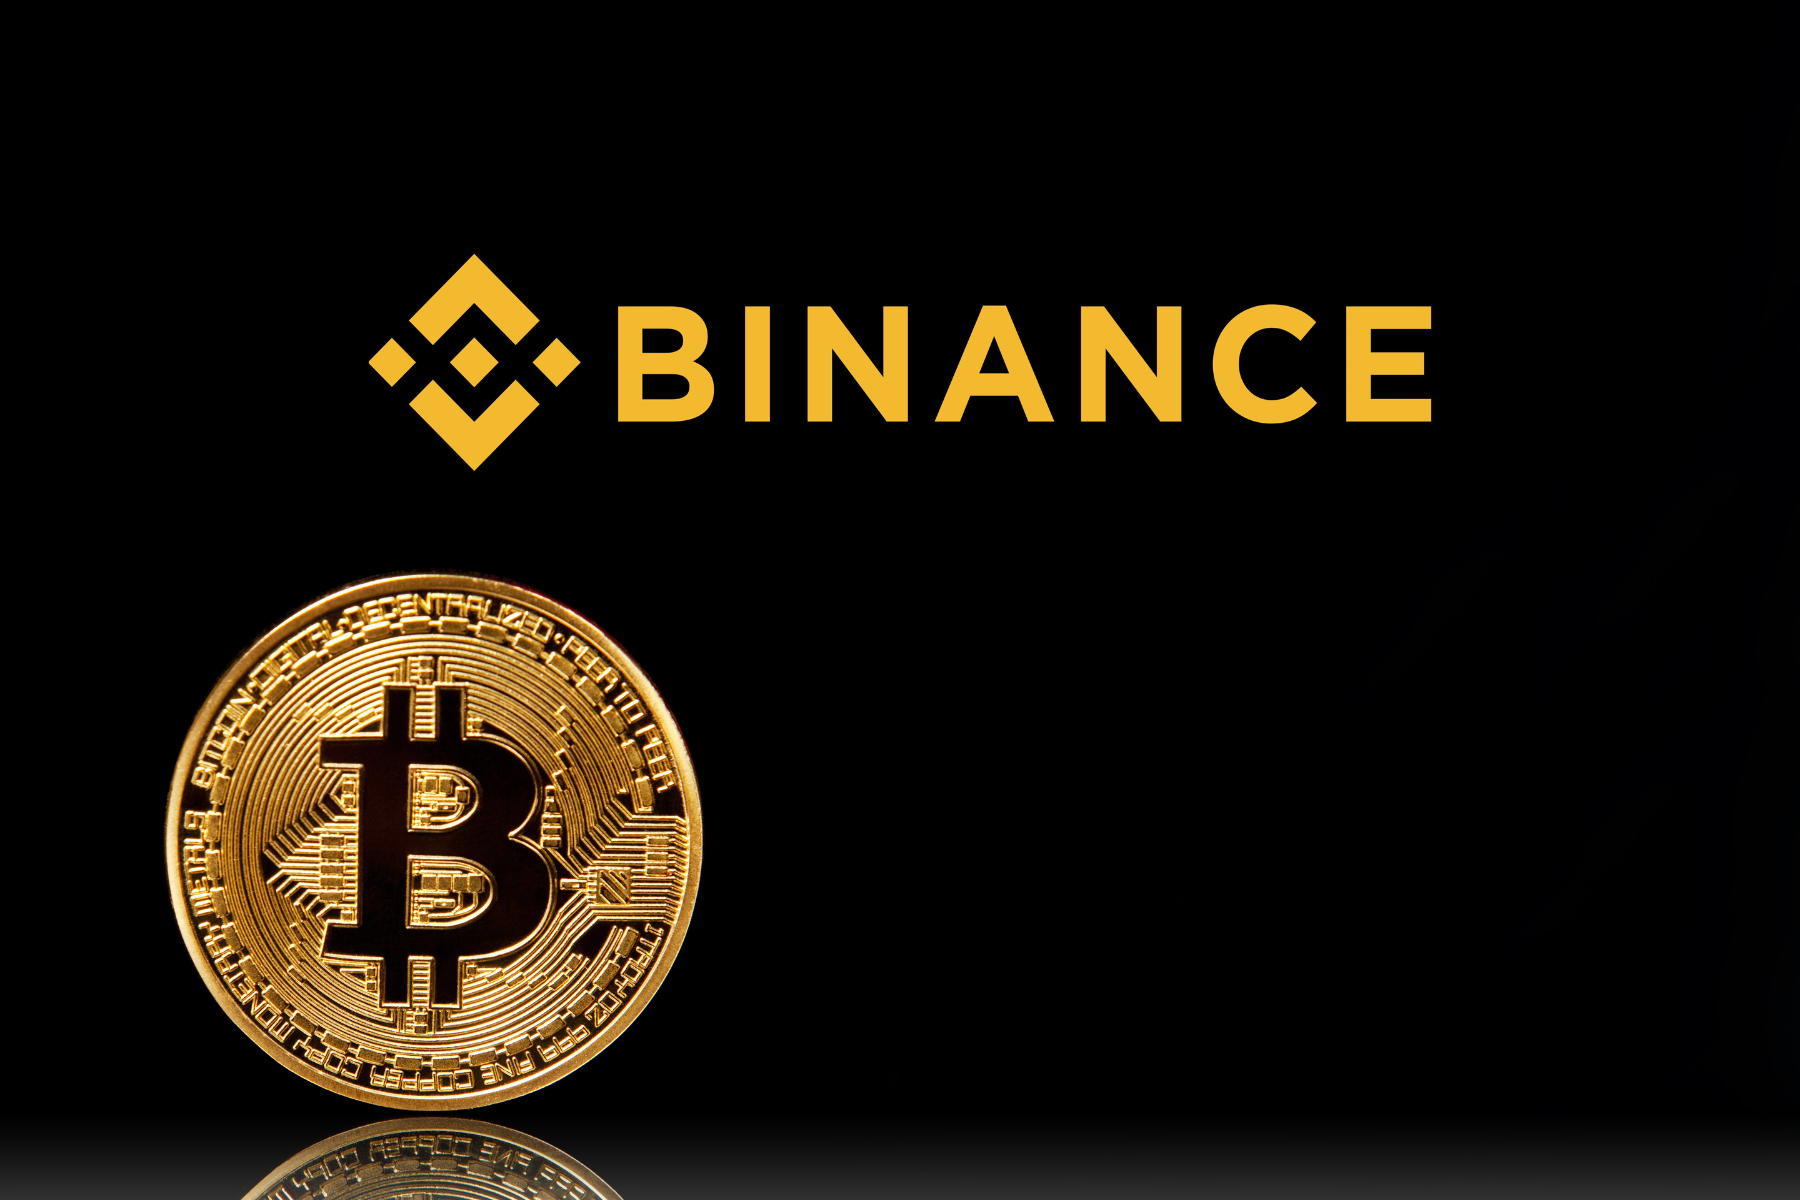 The logo of Binance Coin (BNB)